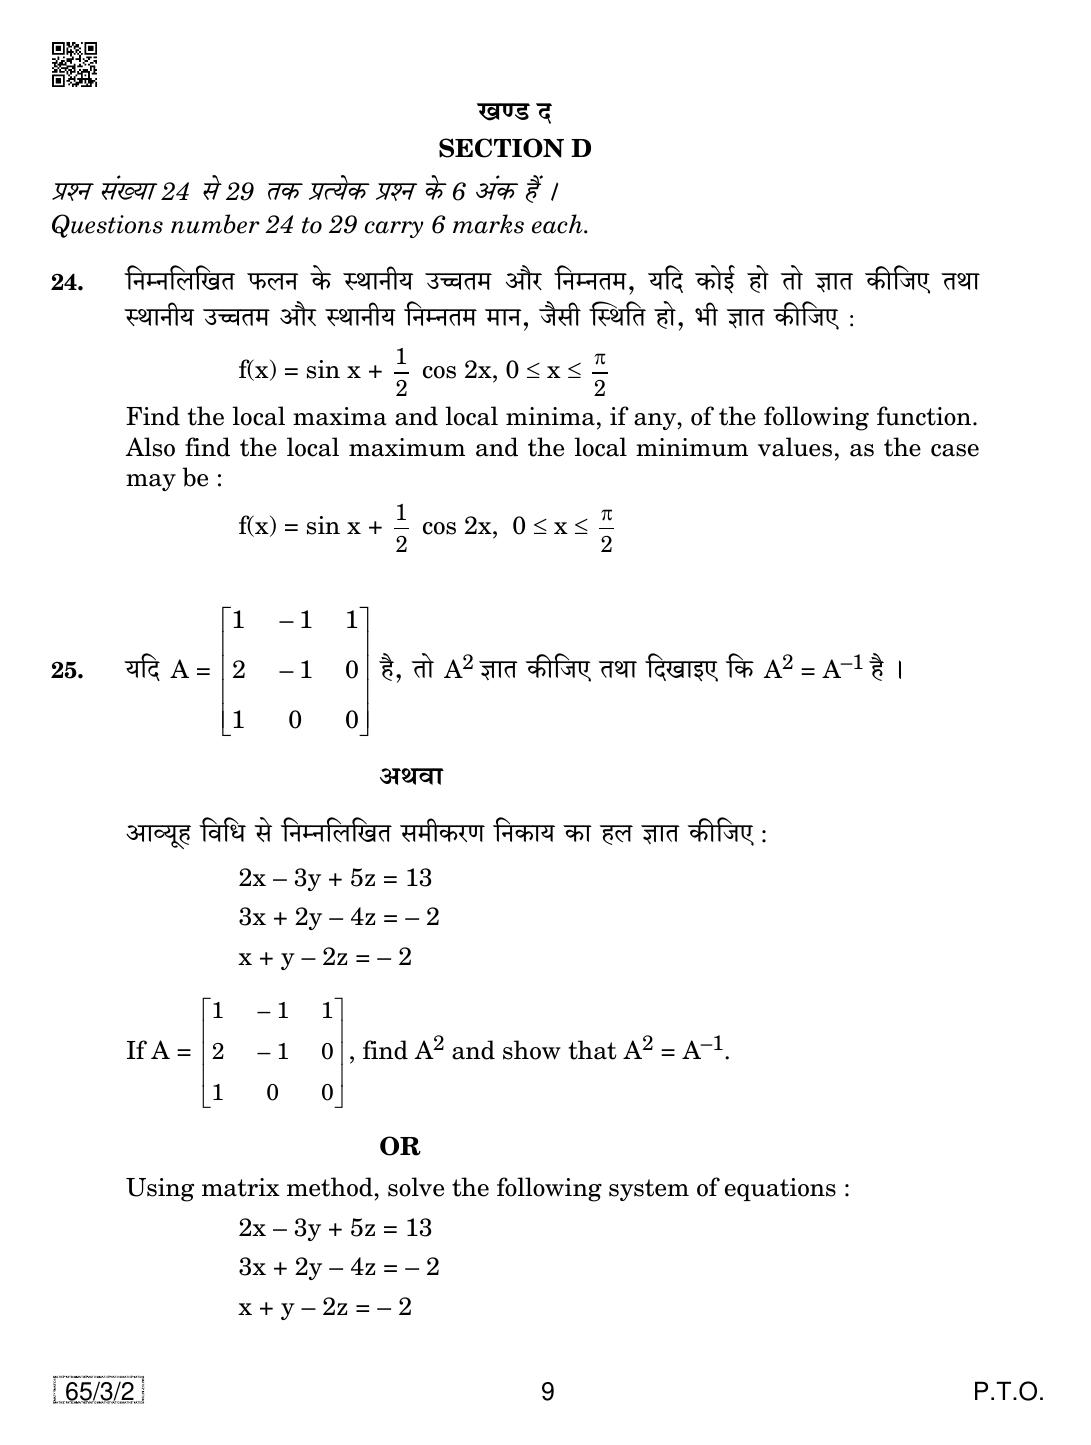 CBSE Class 12 65-3-2 Mathematics 2019 Question Paper - Page 9